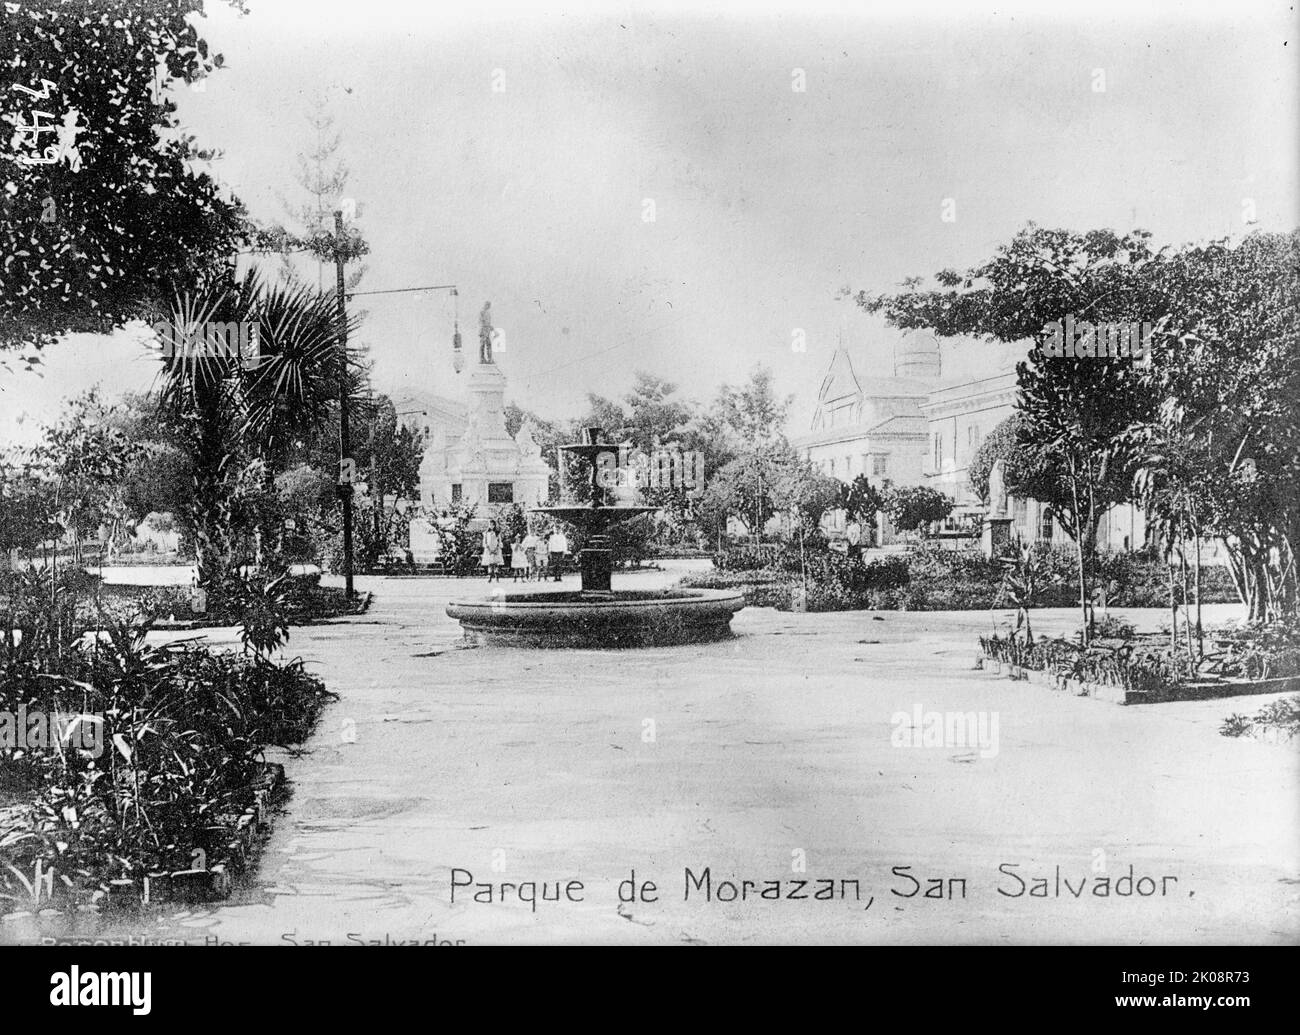 El Salvador- Park Scene In San Salvador, 1911. ['Parque de Morazan'. Monument to Francisco Moraz&#xe1;n in the distance - Moraz&#xe1;n was president of the Federal Republic of Central America]. Stock Photo